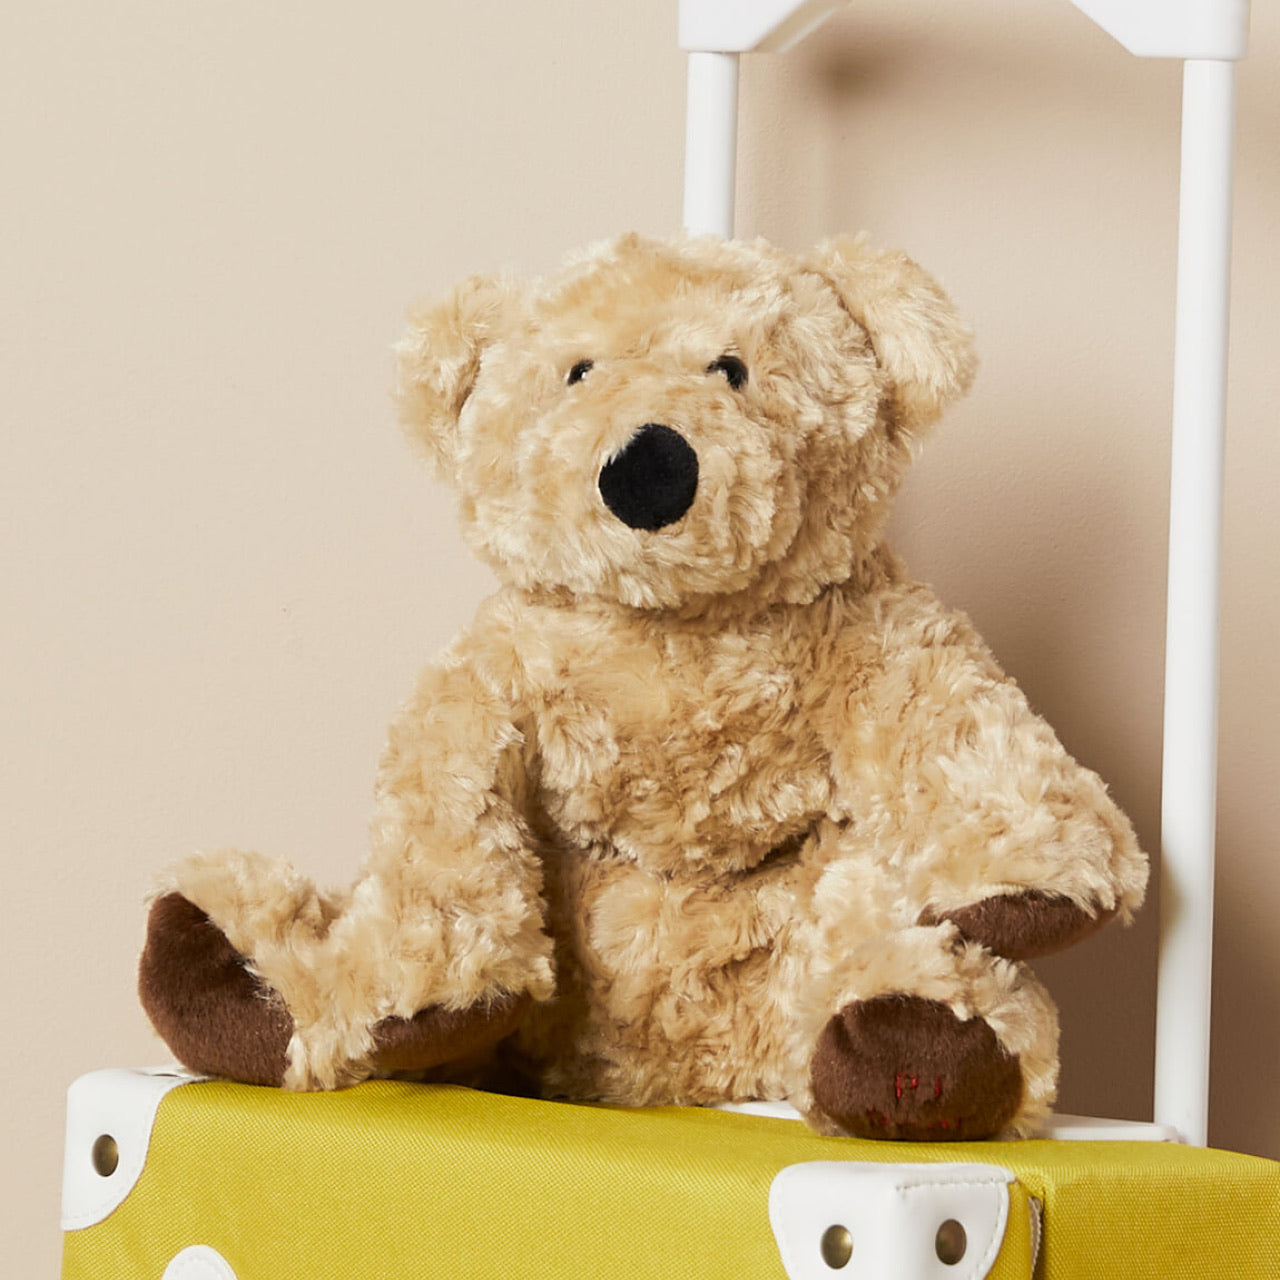 PJ Bear sitting on a suitcase